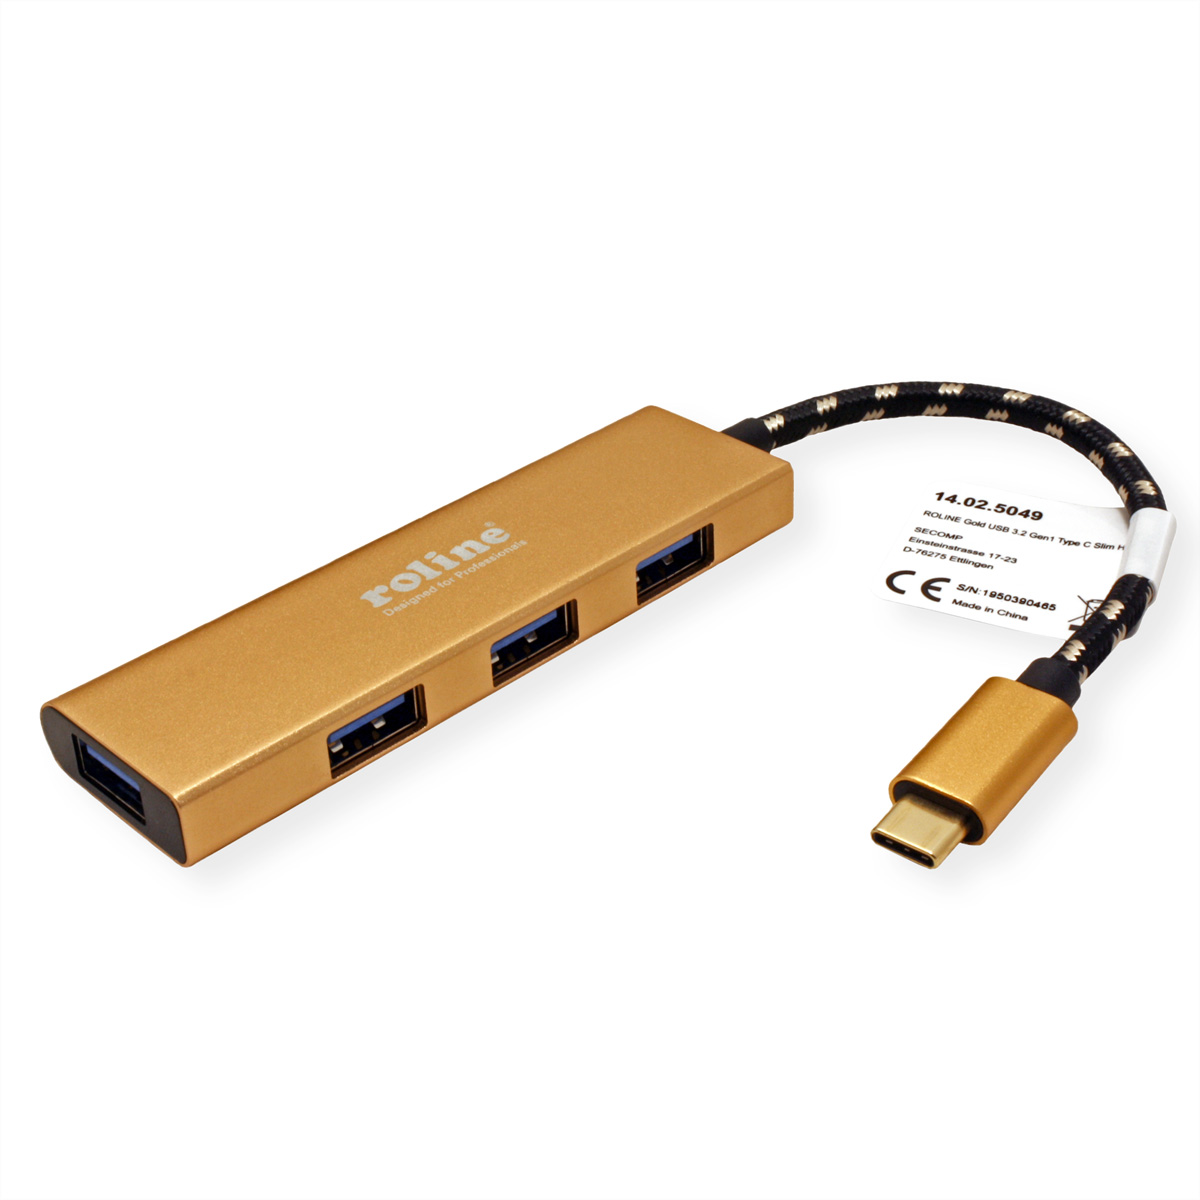 ROLINE GOLD USB 3.2 goldfarben Typ 1 USB C Hub, Anschlusskabel, 4fach, Gen Hub